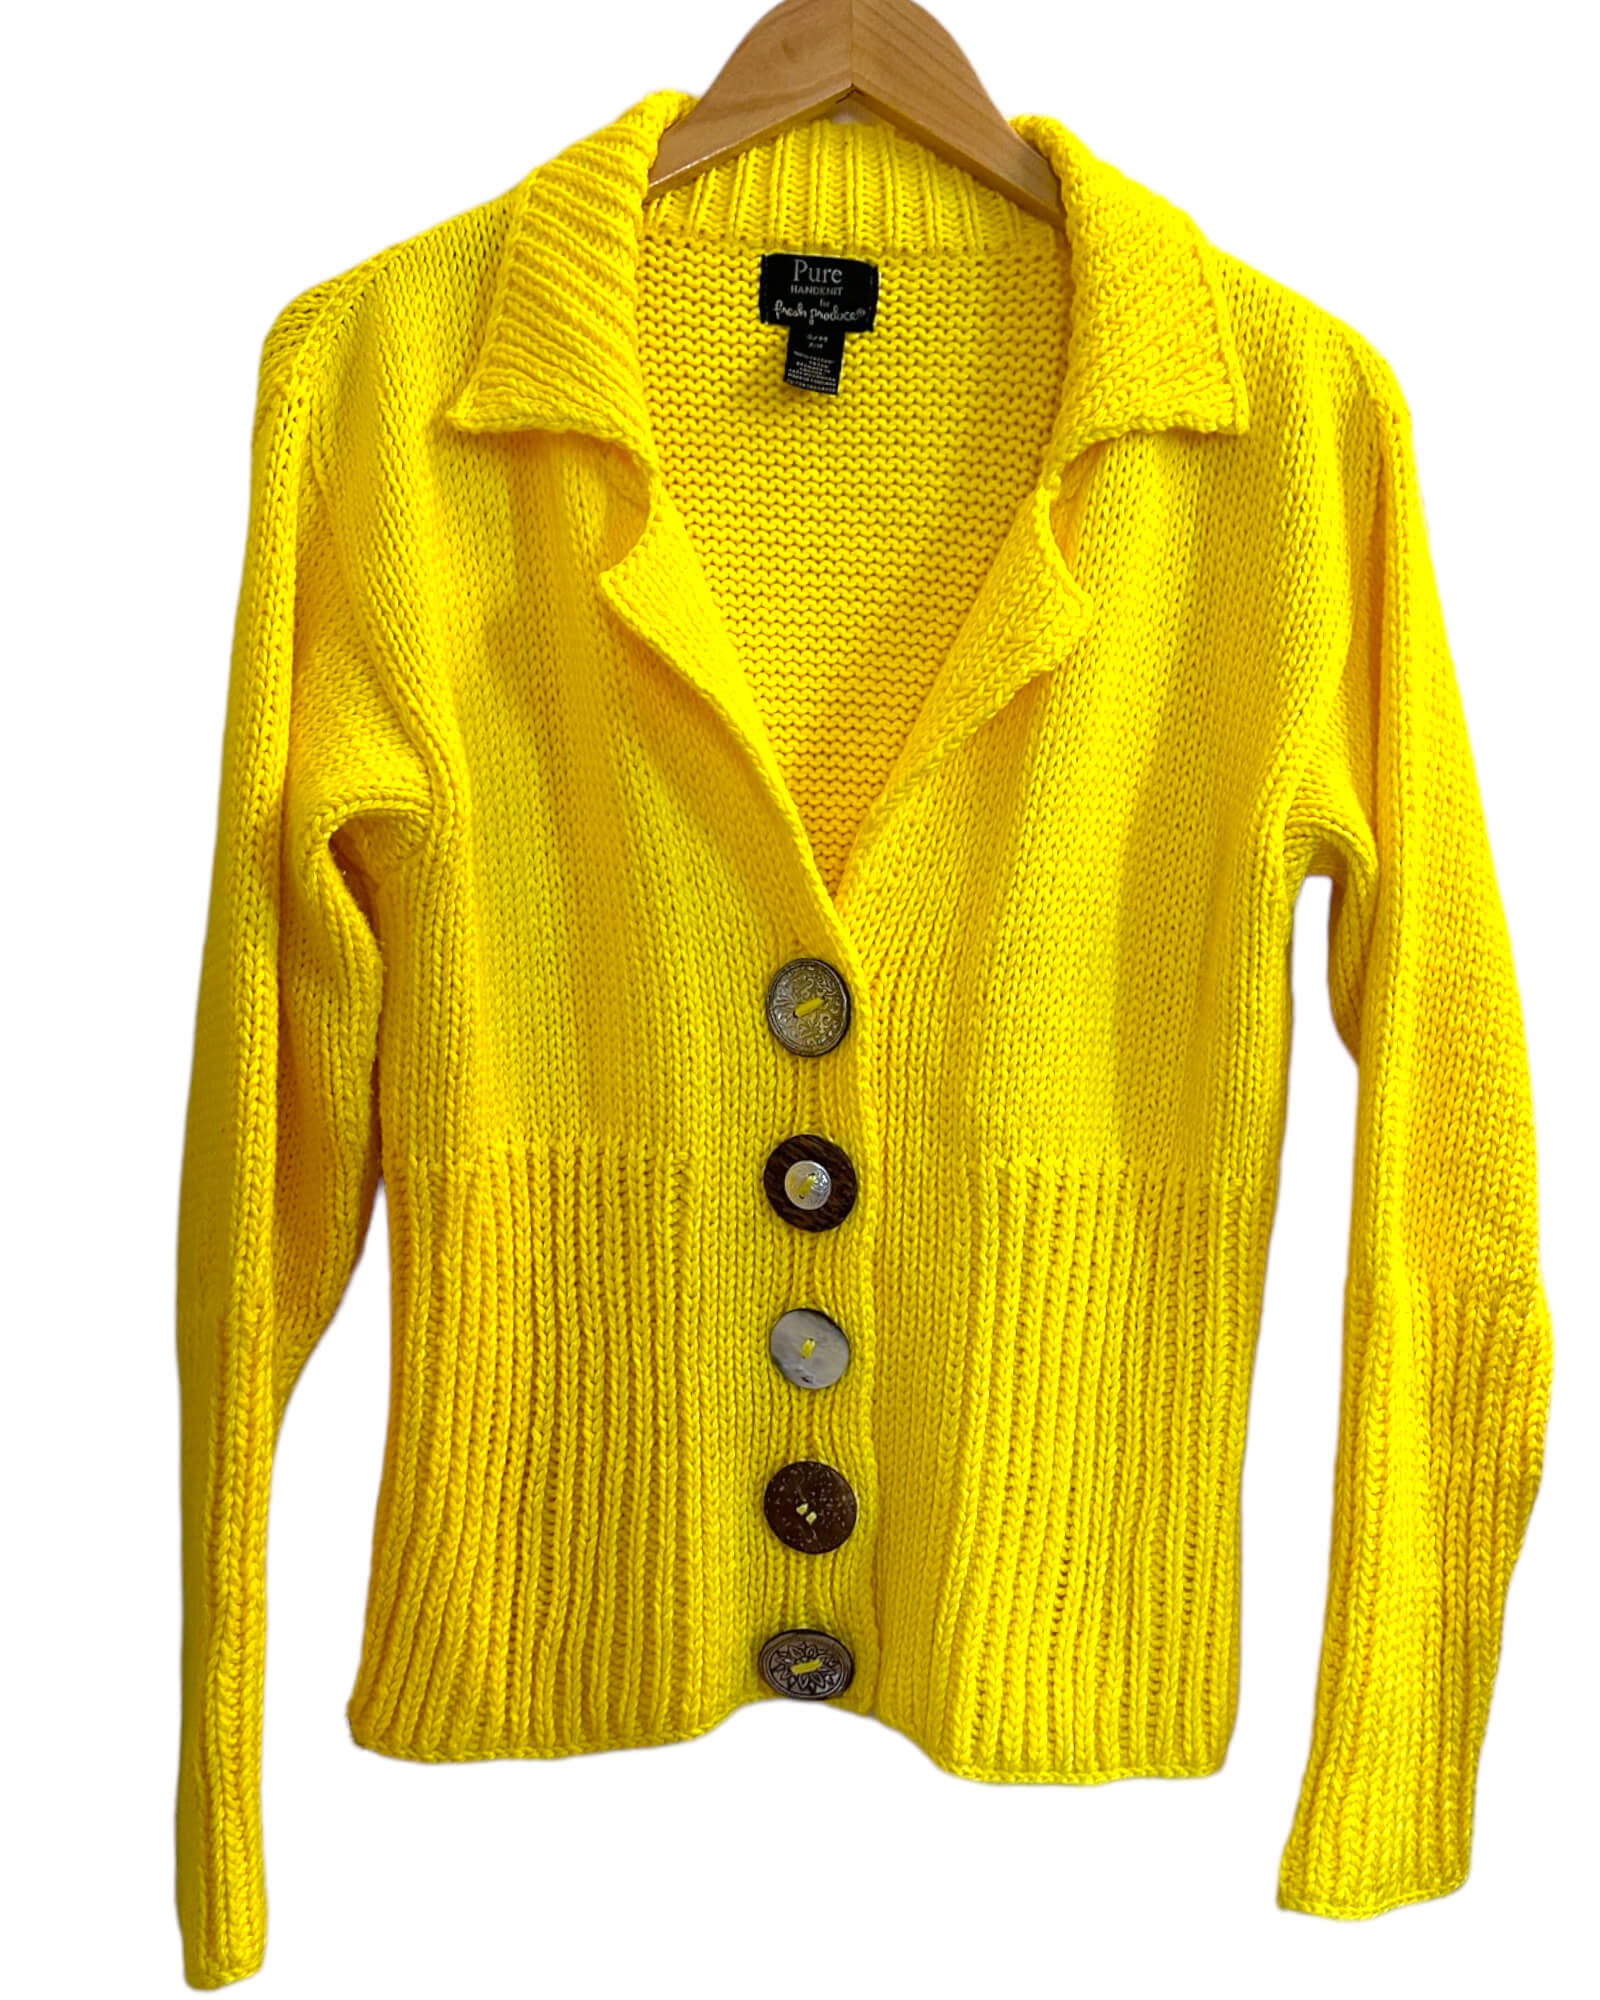 Bright Winter FRESH PRODUCE PURE HANDKNIT canary yellow sweater jacket